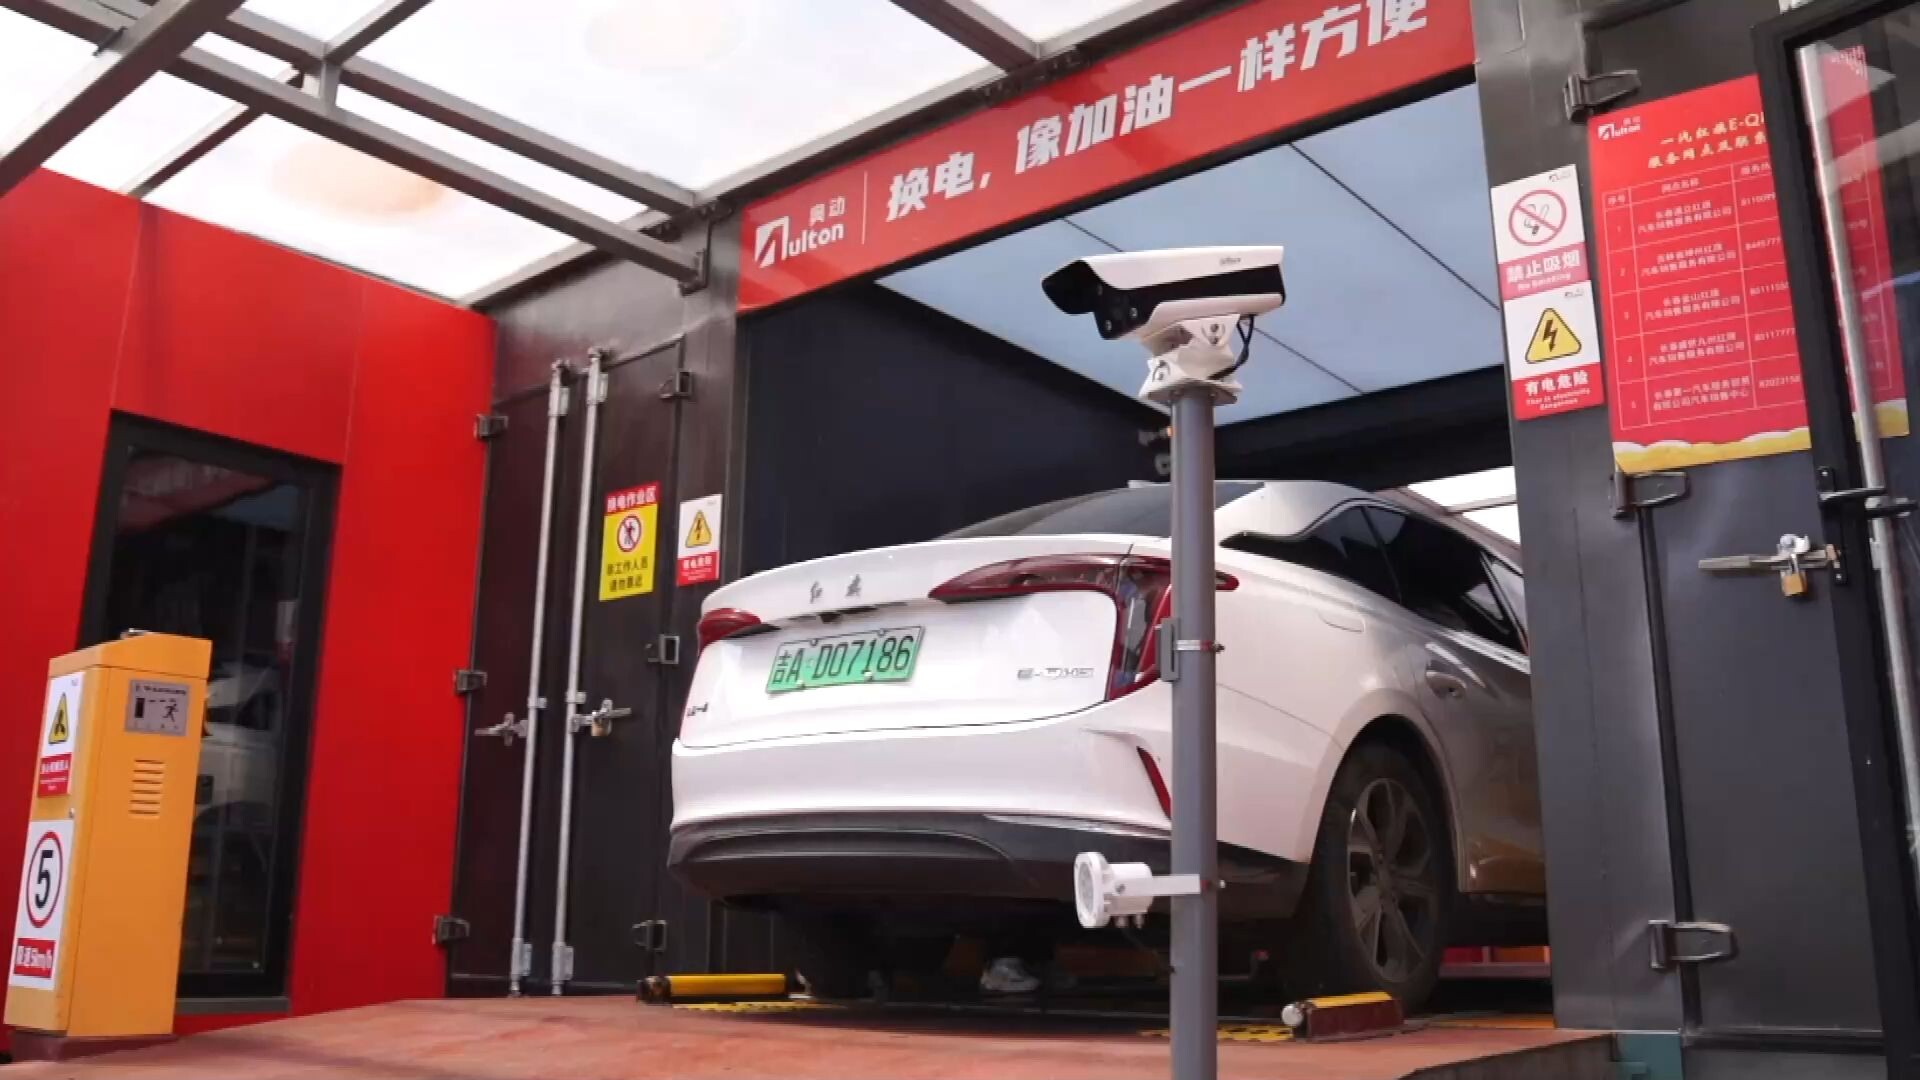 GLOBALink : 'หงฉี' ค่ายรถจีน เปิดตัวรถยนต์ไฟฟ้ารุ่นใหม่ ชาร์จ-เปลี่ยนแบตฯ ได้